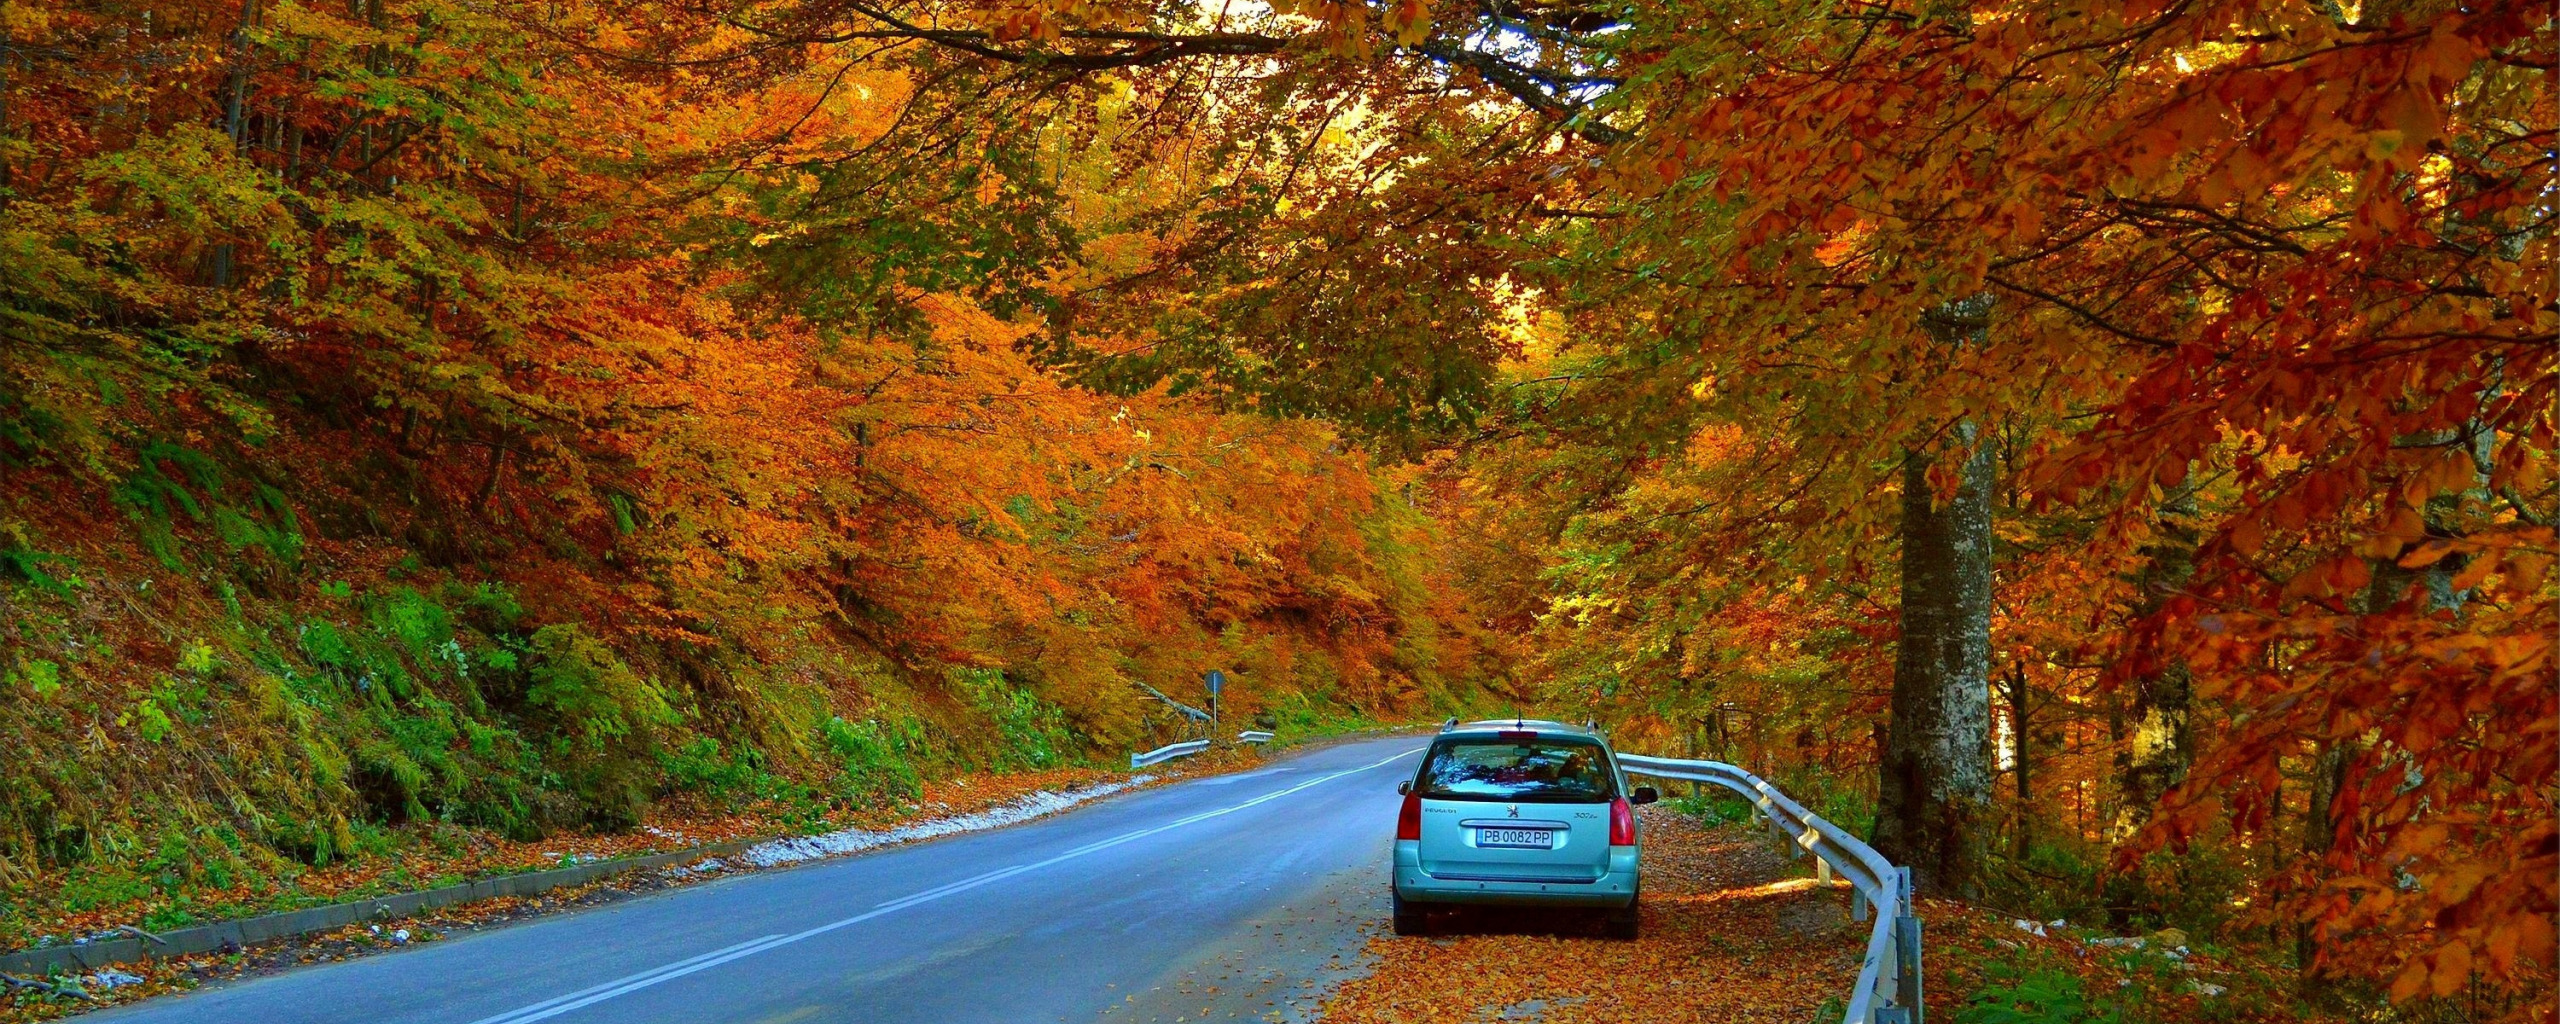 Дорога, Осень, Машина, Car, Fall, Листва, Автомобиль, Autumn, Colors, Road,...